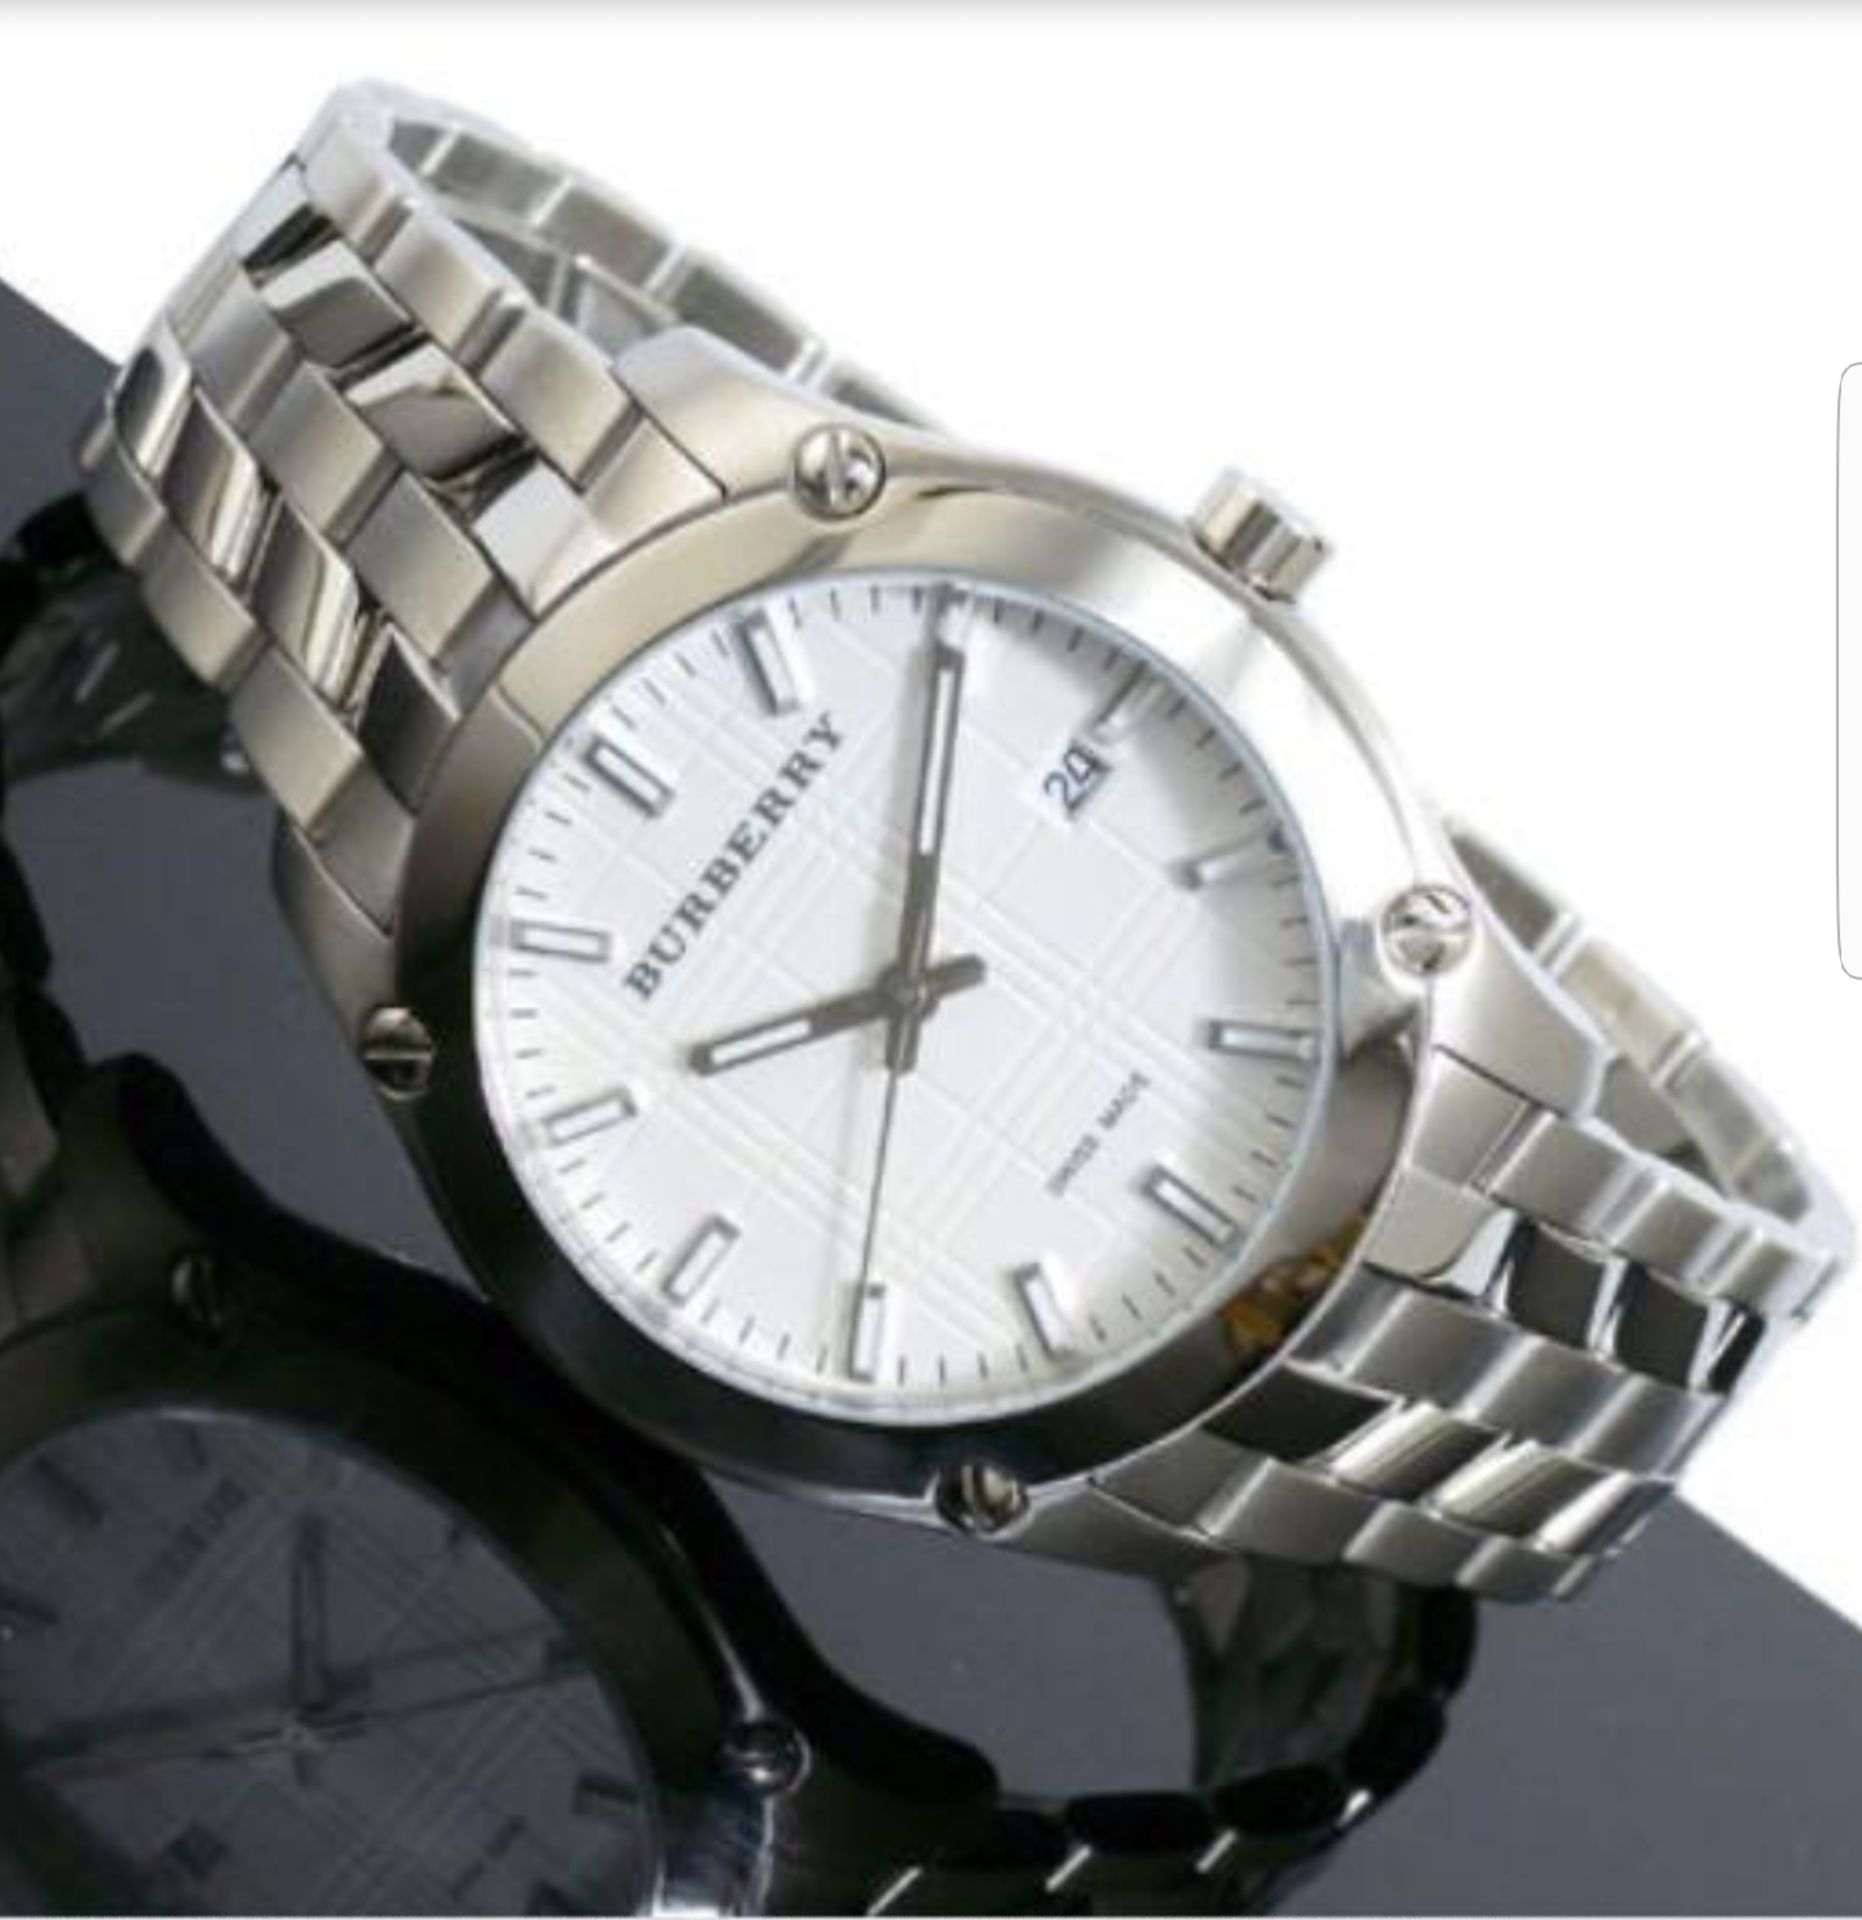 Burberry BU1852 Men's White Dial Stainless Steel Bracelet Wrist Watch - Image 2 of 6